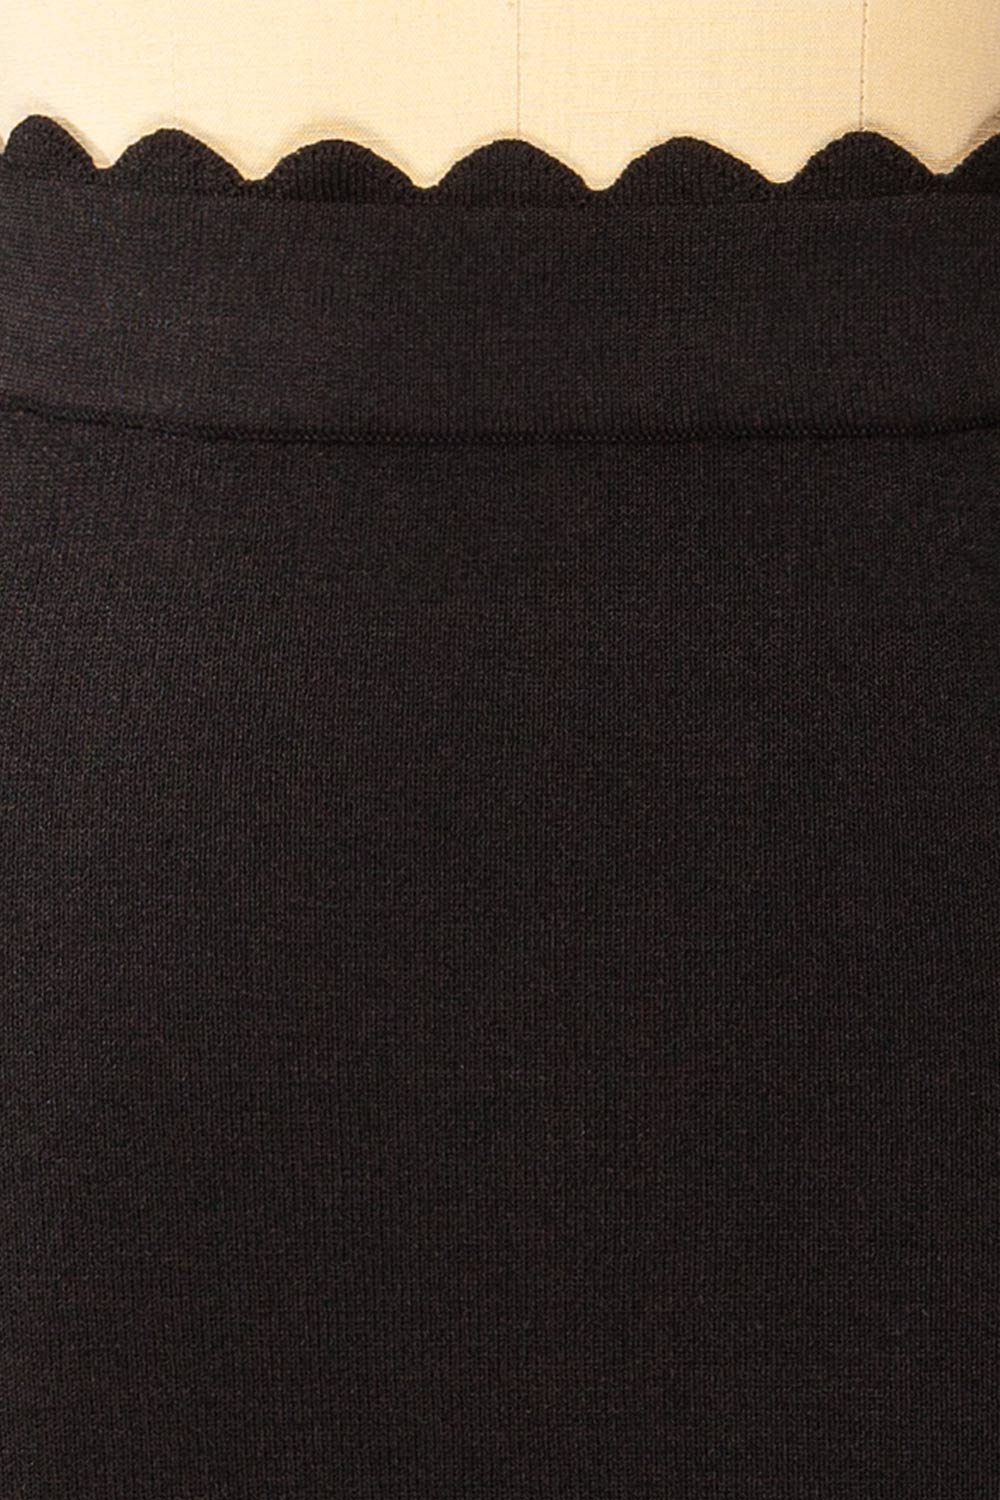 Alphacrest Fitted Black Skirt w/ Scalloped Hem | La petite garçonne  fabric 